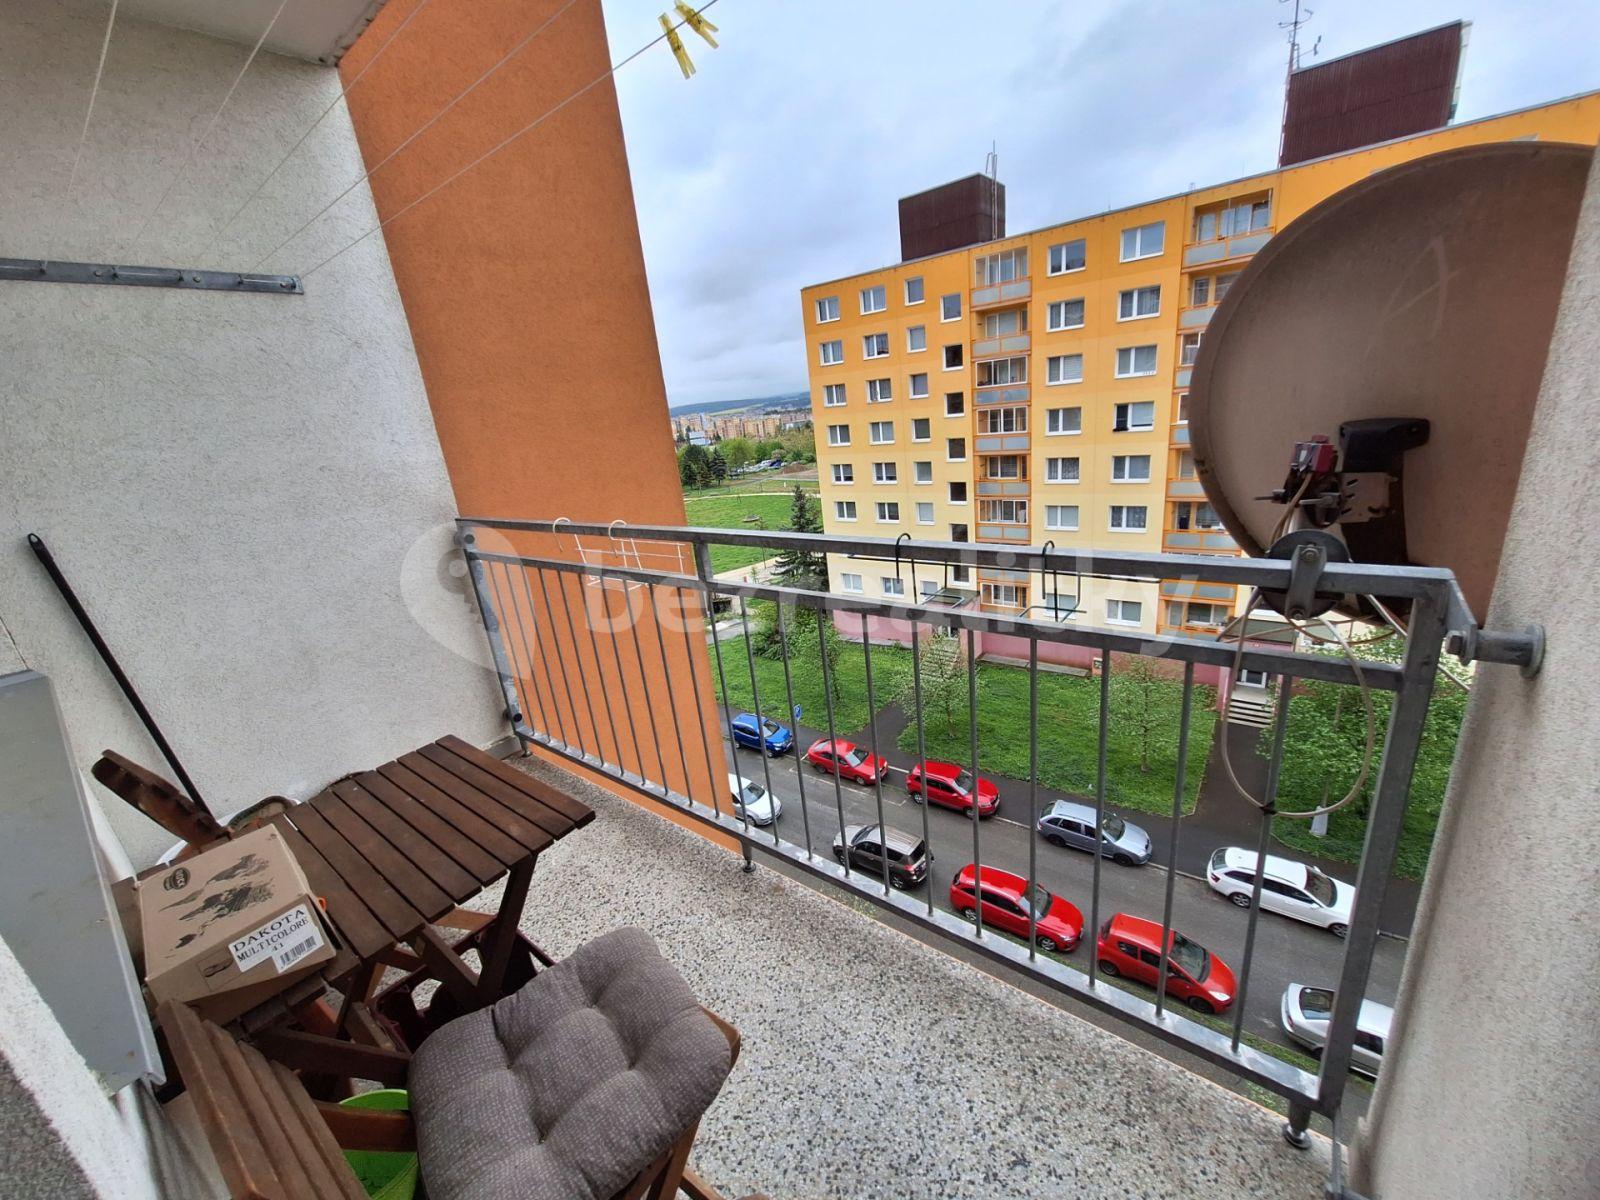 3 bedroom flat for sale, 78 m², Krašovská, Plzeň, Plzeňský Region